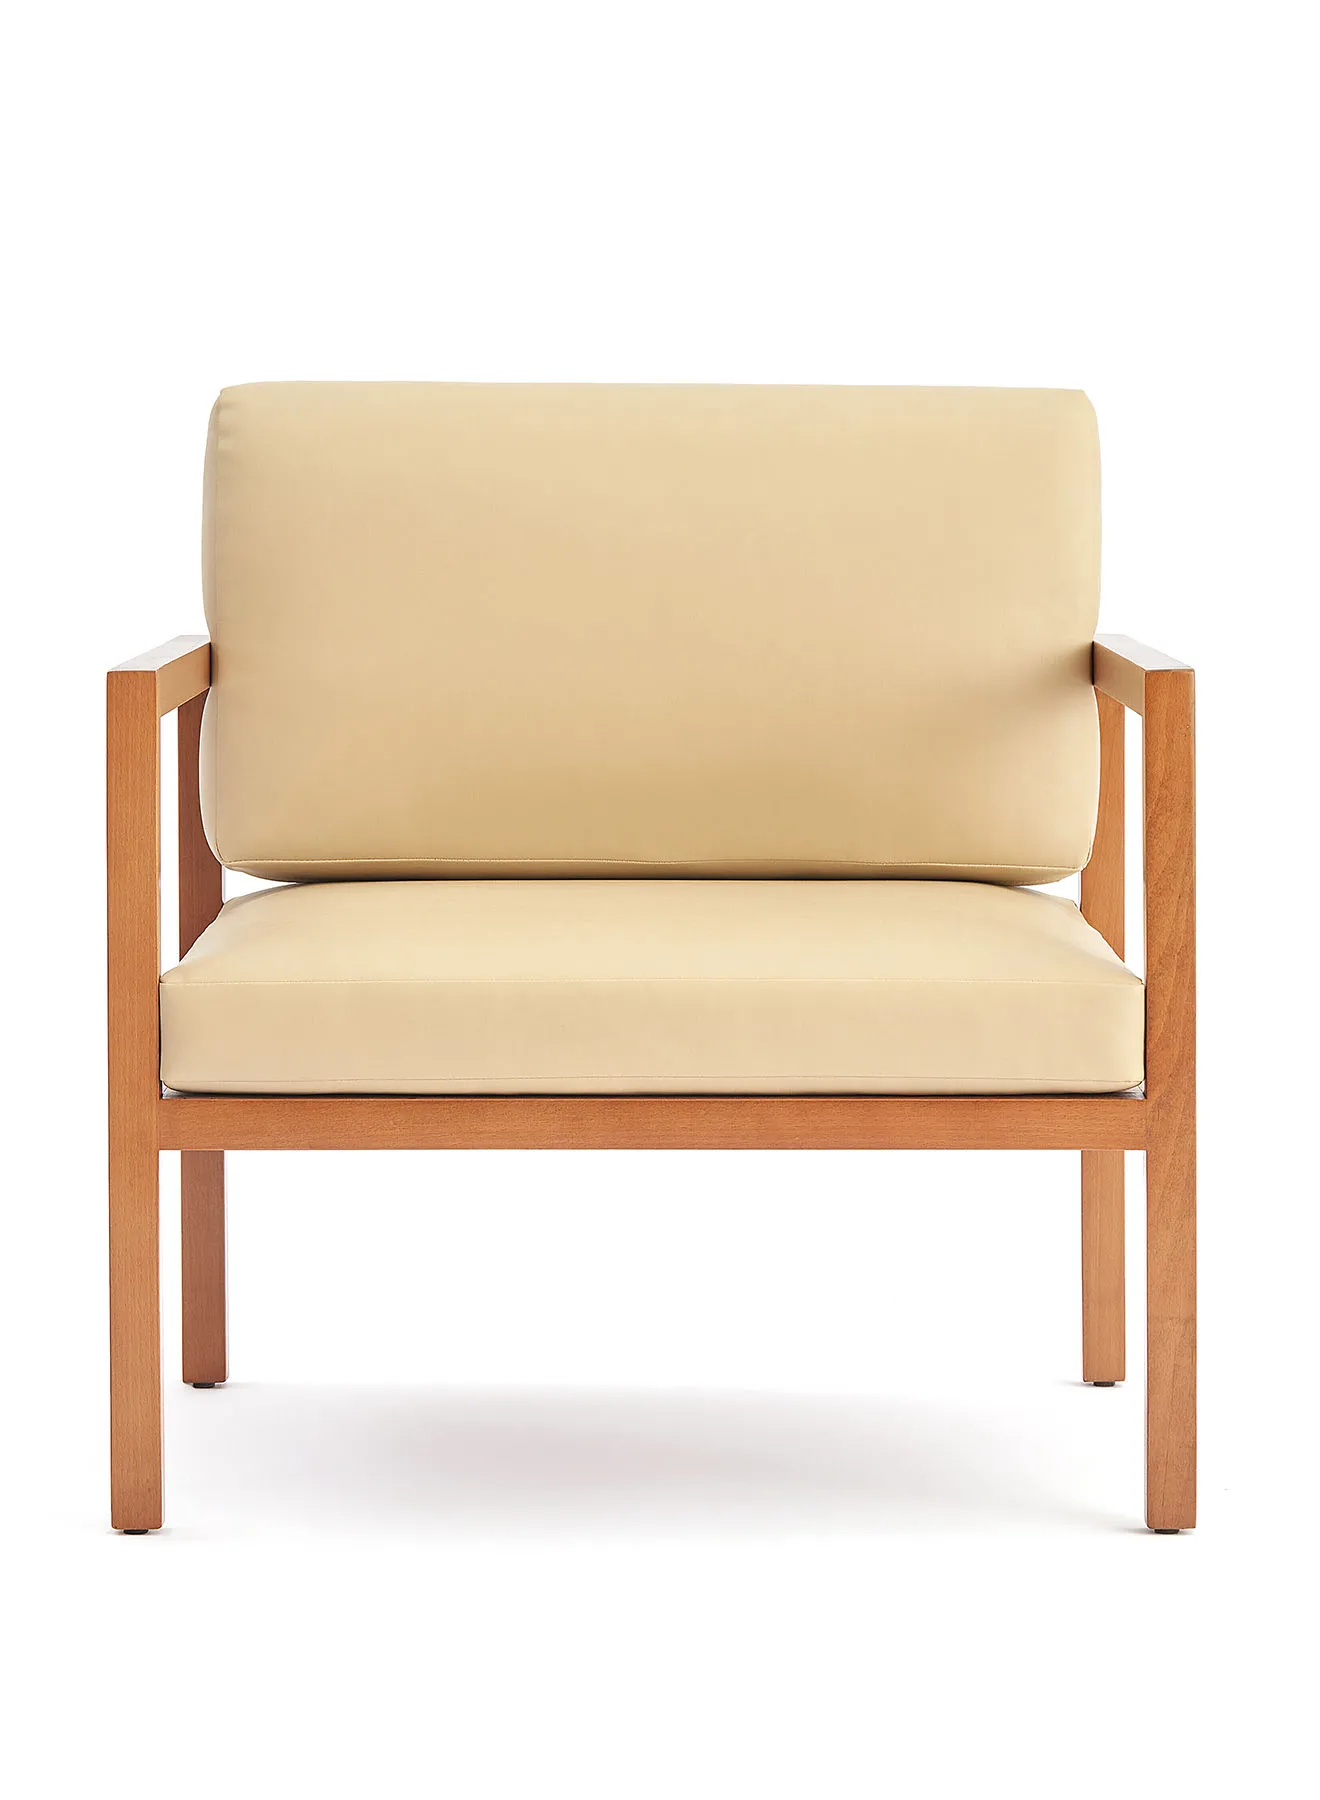 ebb & flow Armchair Luxurious - In Beige Wooden Chair Size 762 X 740 X 735